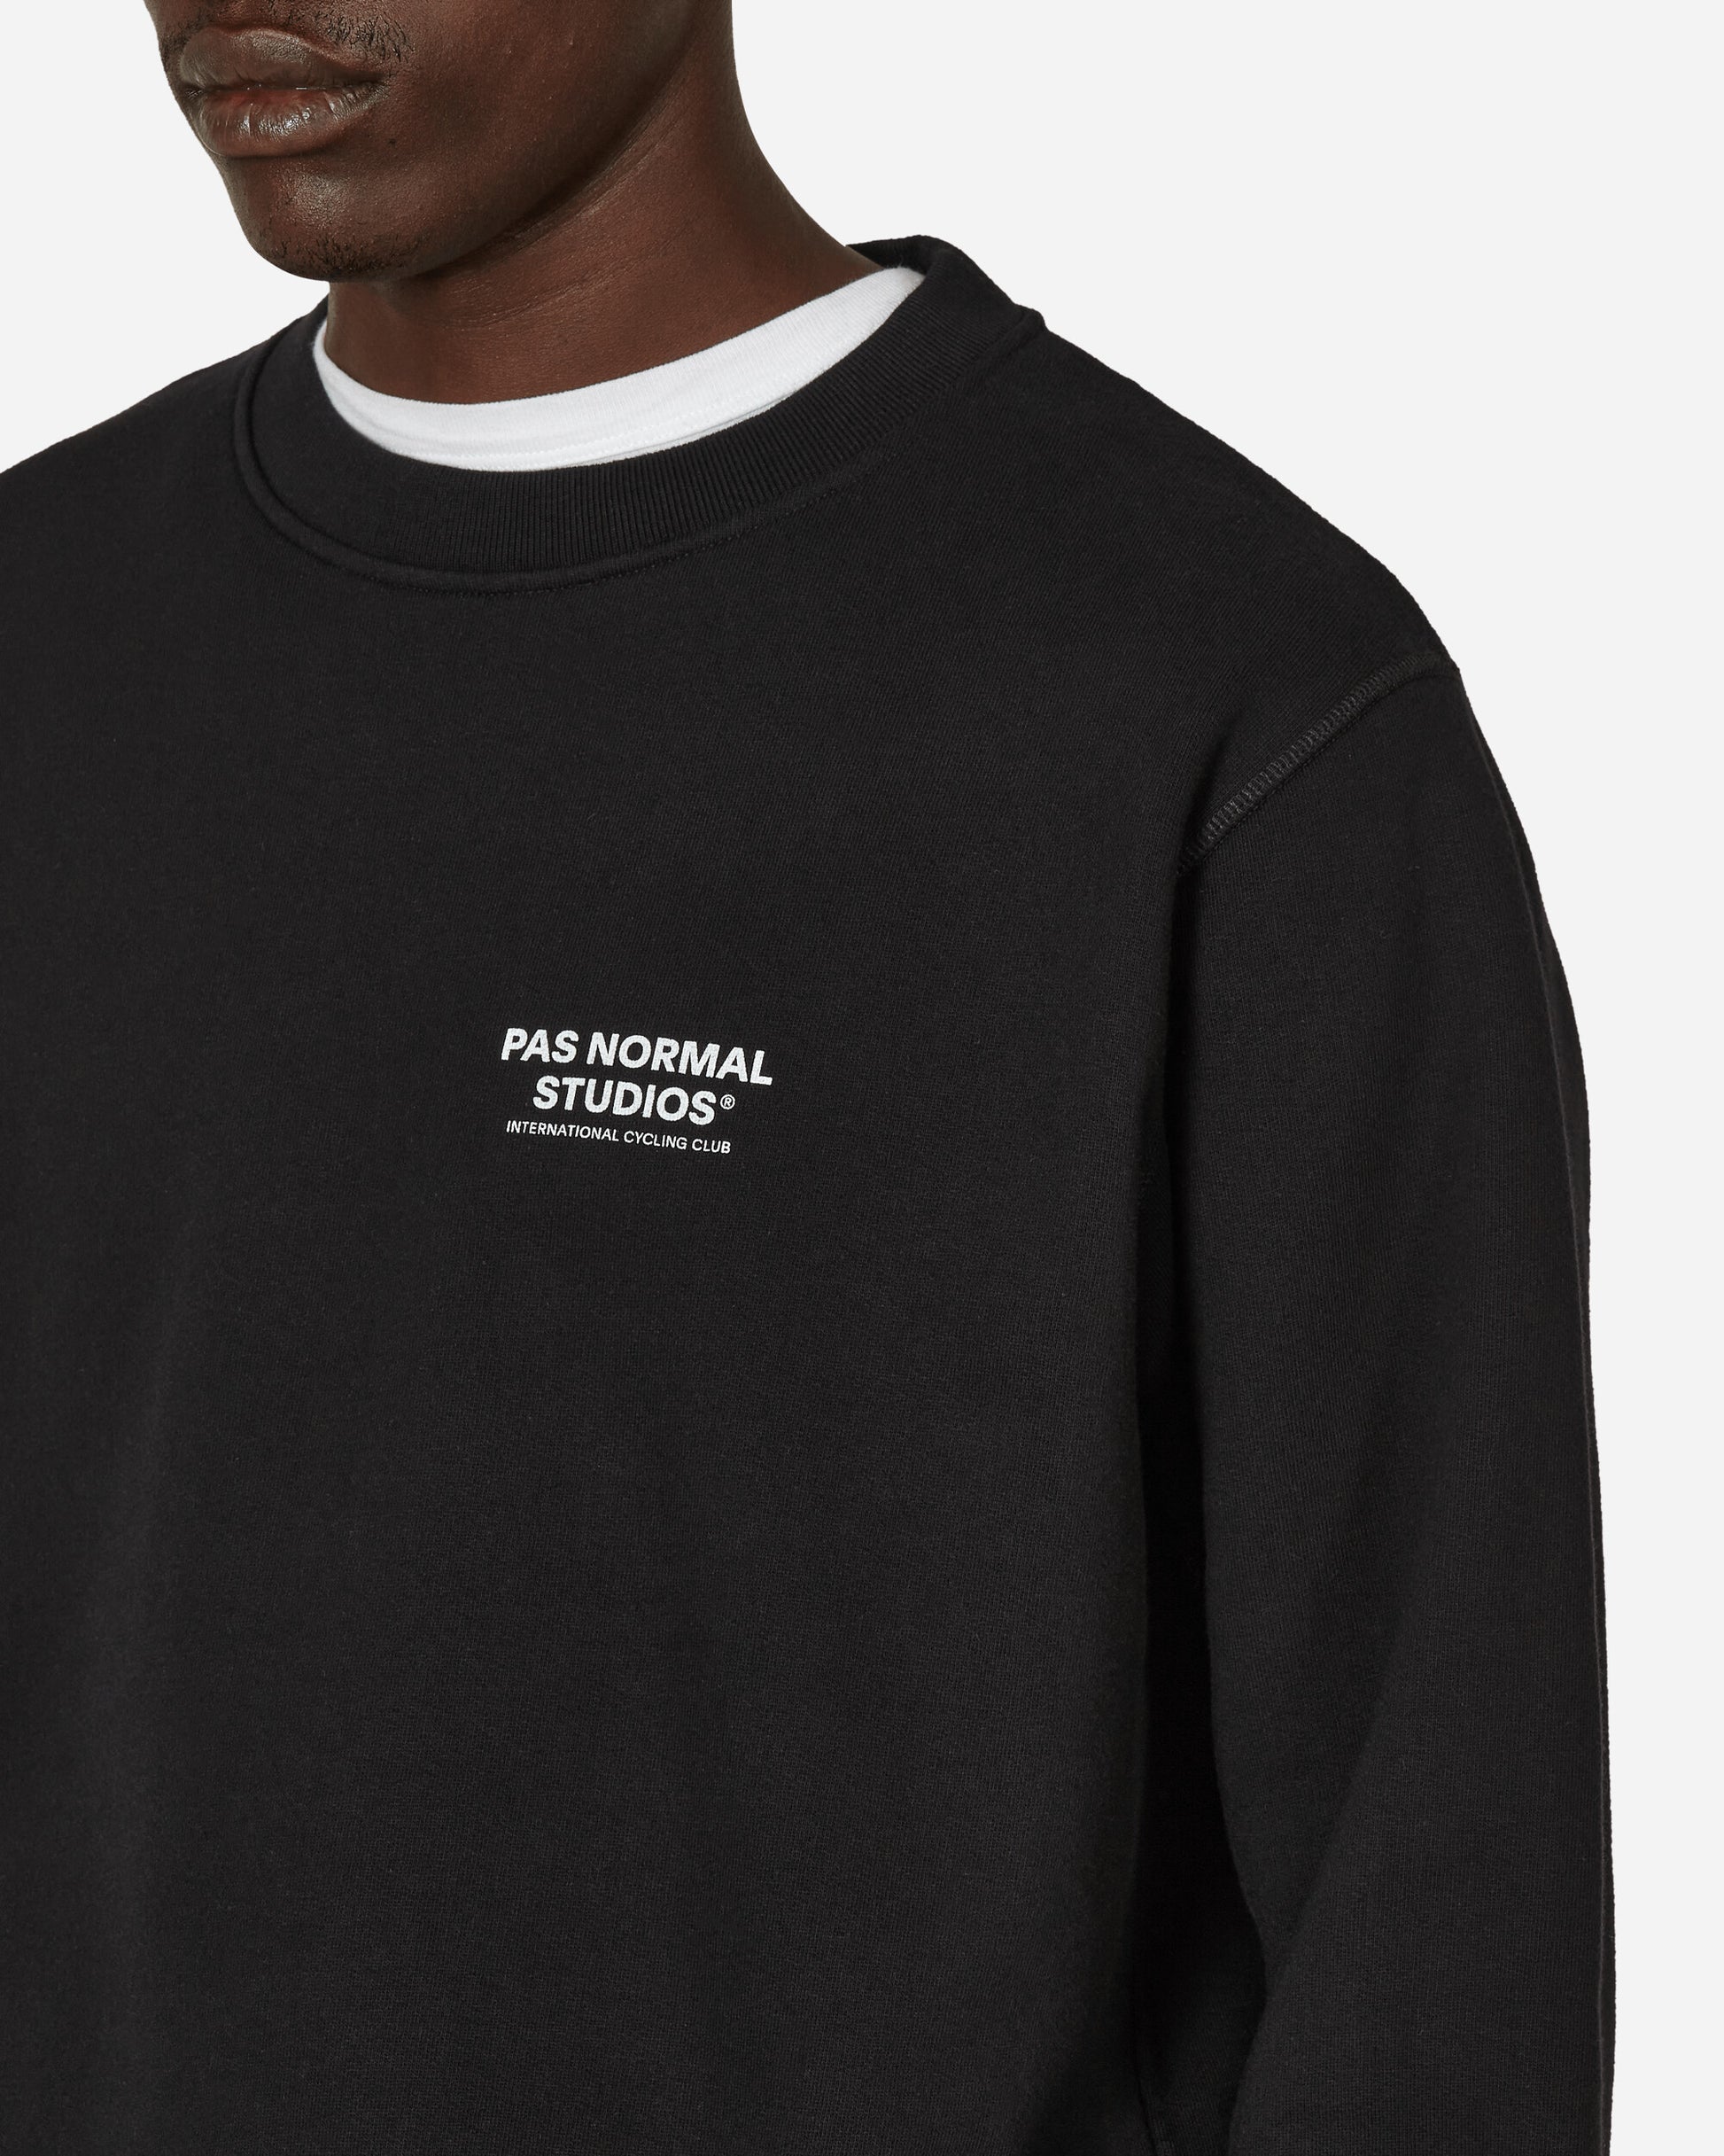 Pas Normal Studios Off-Race Pns Sweatshirt Black Sweatshirts Crewneck NP2064HA 1